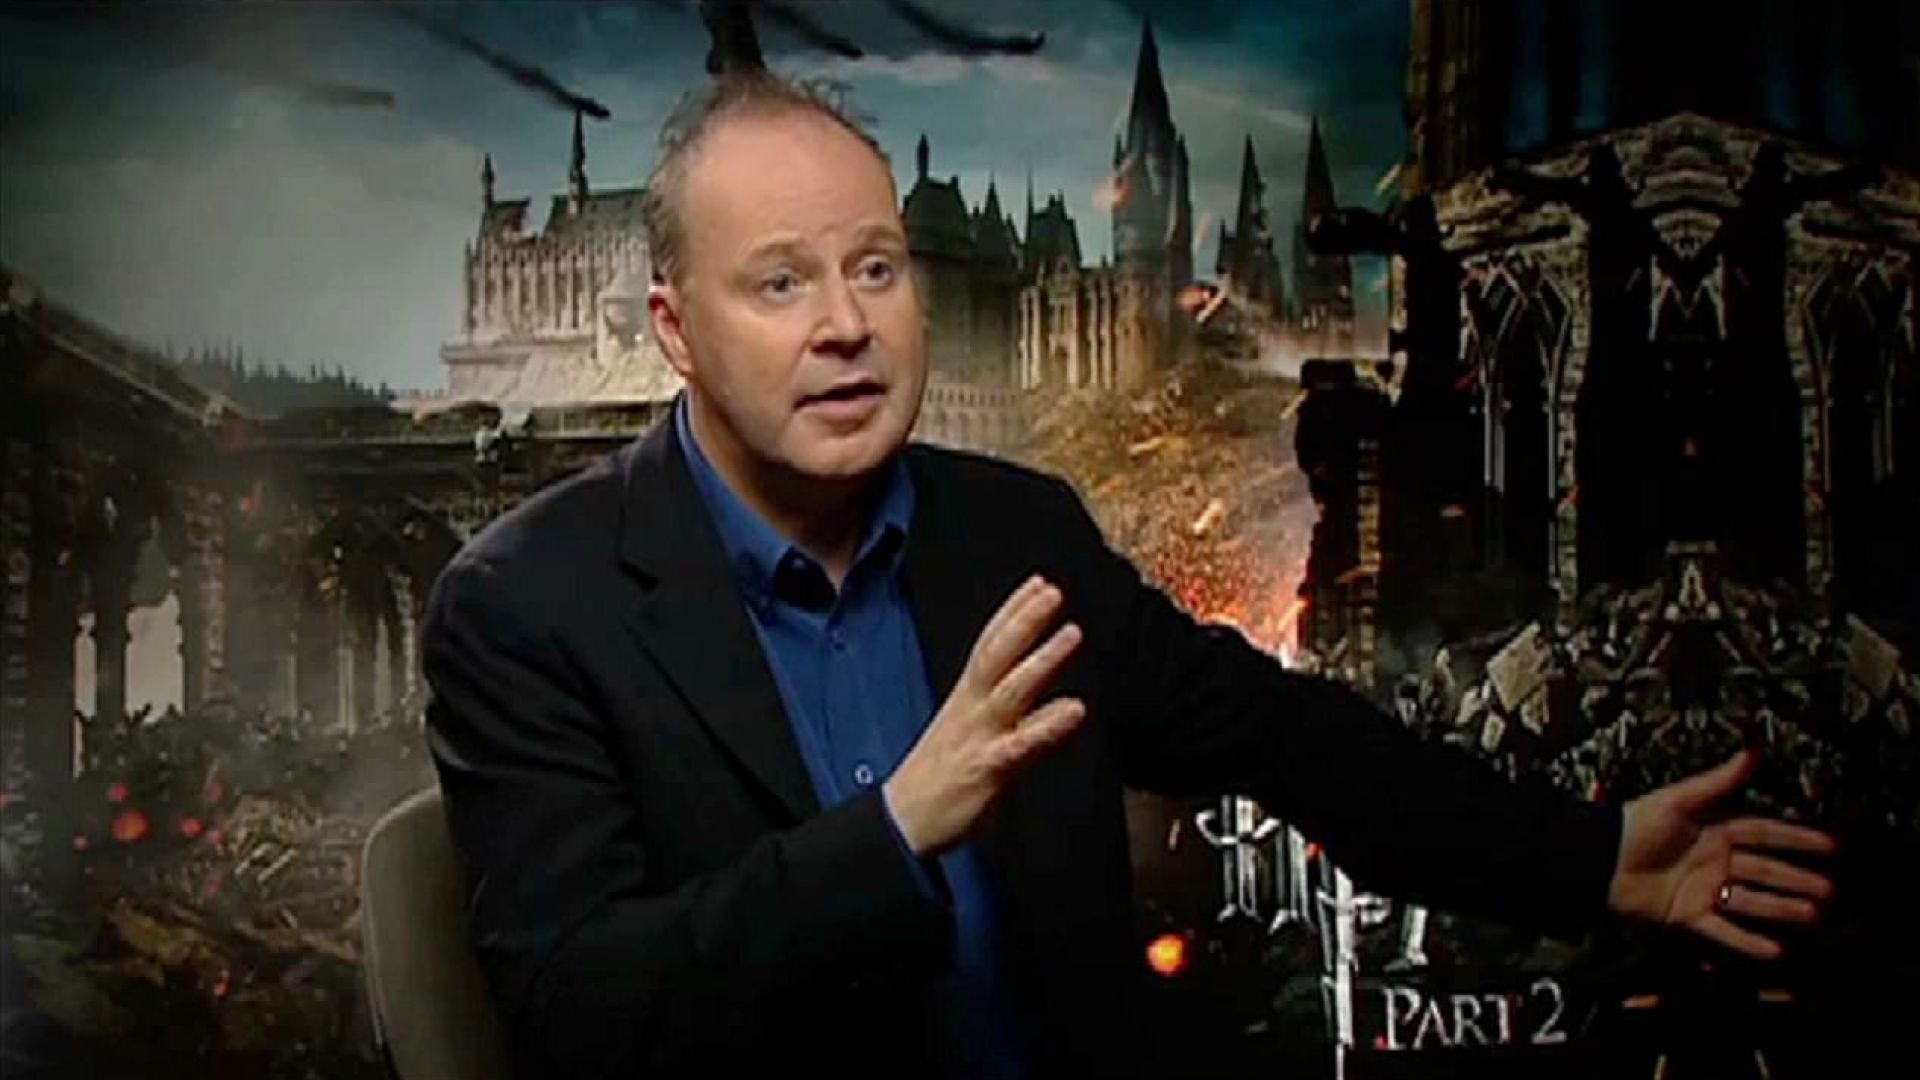 David Yates talks about directing Harry Potter 7 Part 2